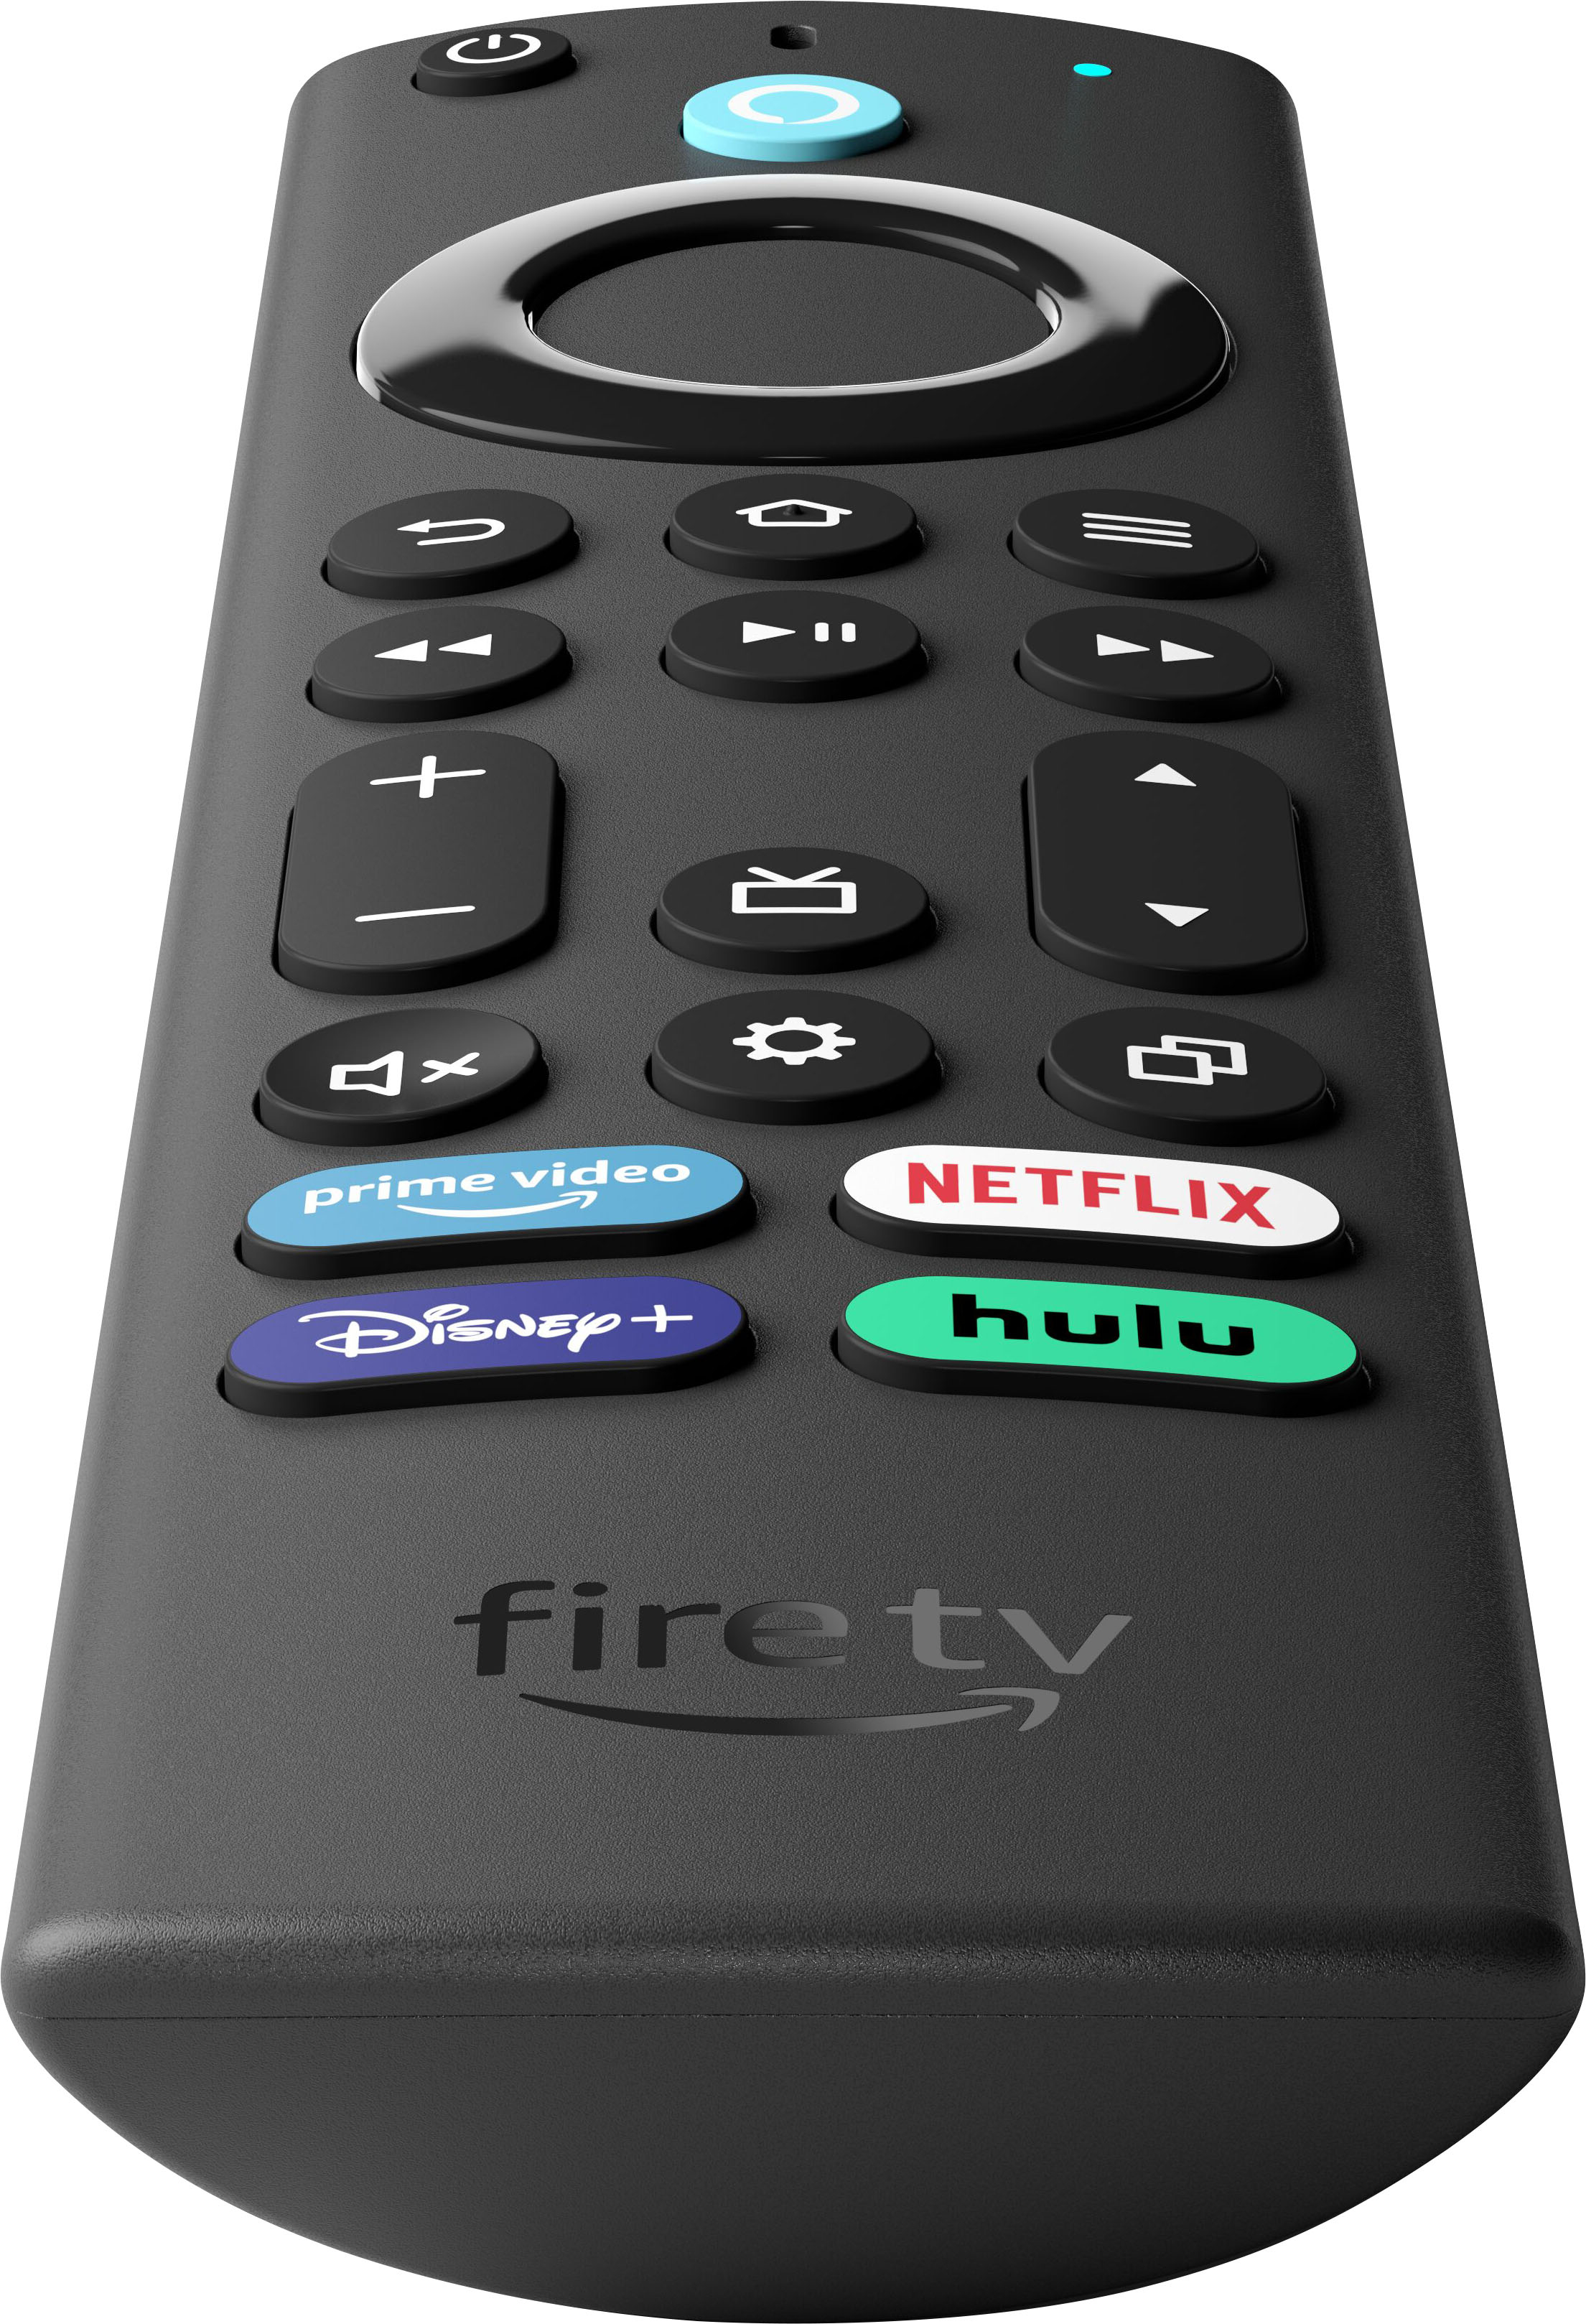 Angle View: Amazon - Fire TV Alexa Voice Remote, requires compatible Fire TV Omni Series or Fire TV 4-Series smart TV